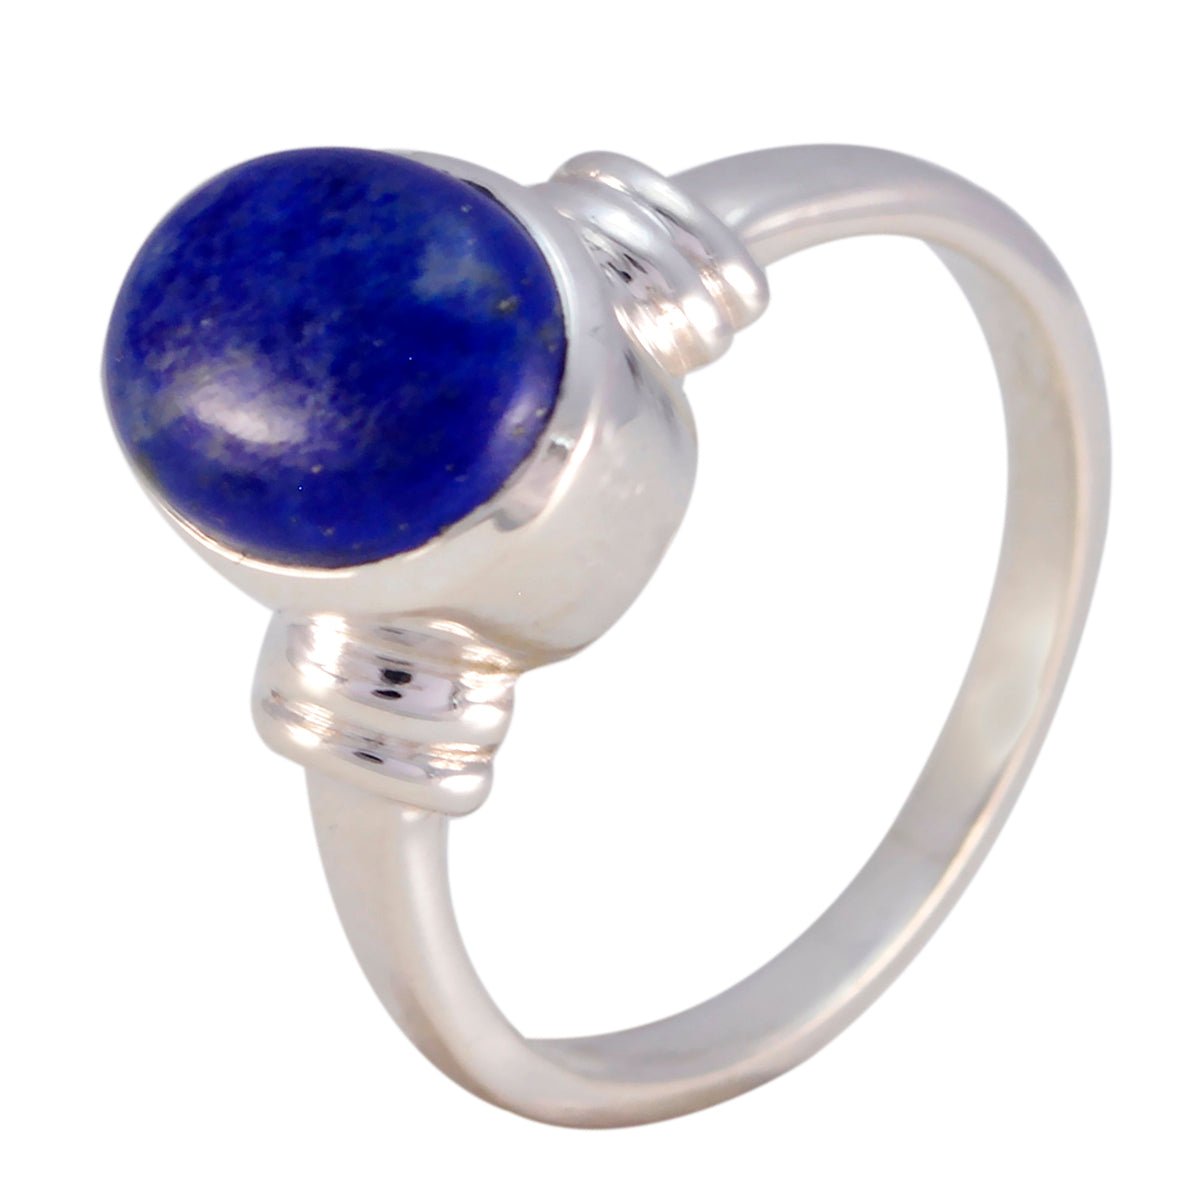 Riyo Well-Formed Gem Lapis Lazuli Solid Silver Ring Resin Jewelry